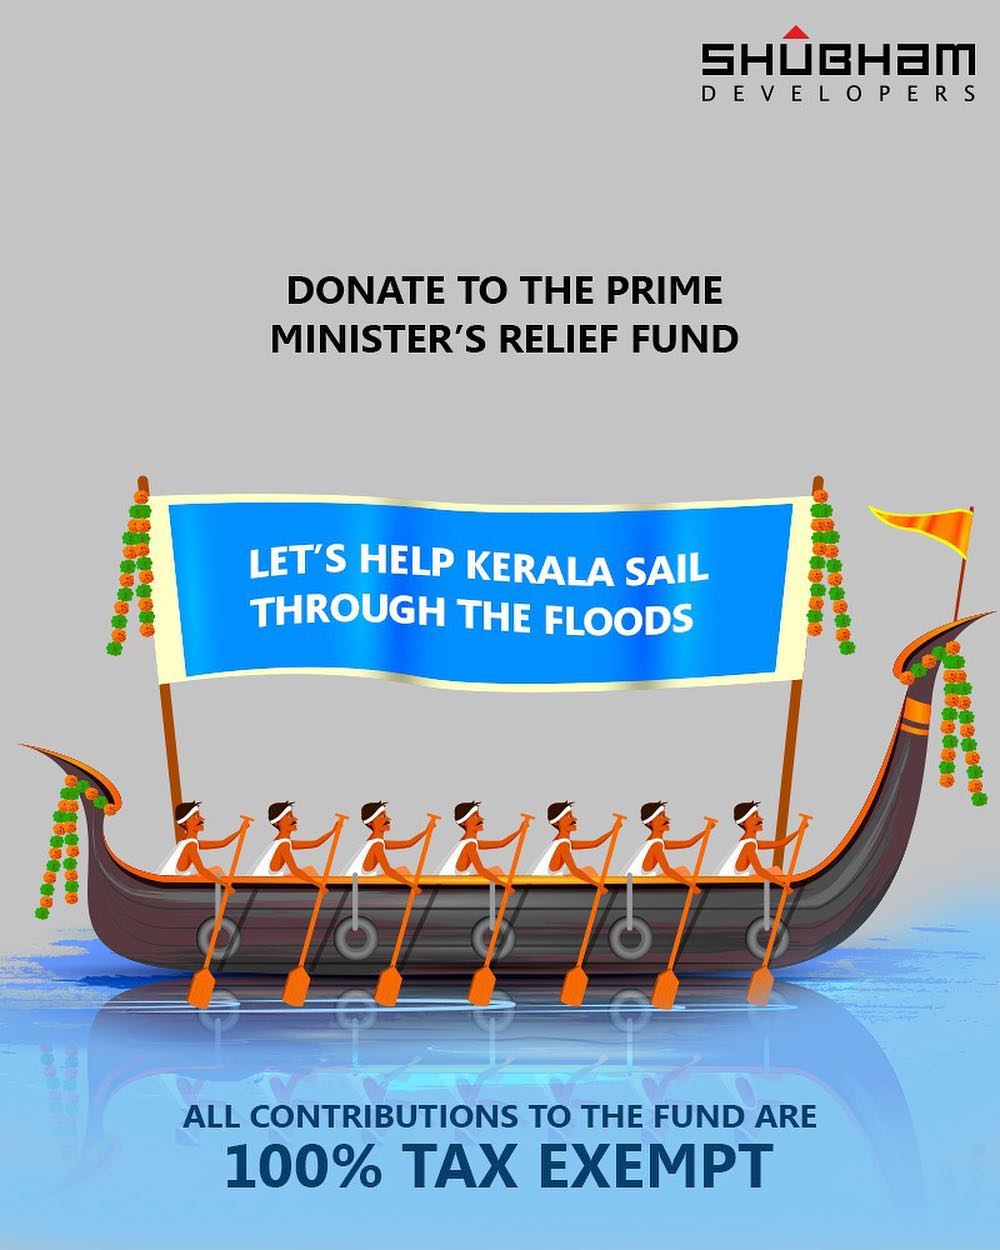 Donate generously! #Kerala needs us! 
#DonateForKerala #Ahmedabad #Gujarat #ShubhamDevelopers #RealEstate